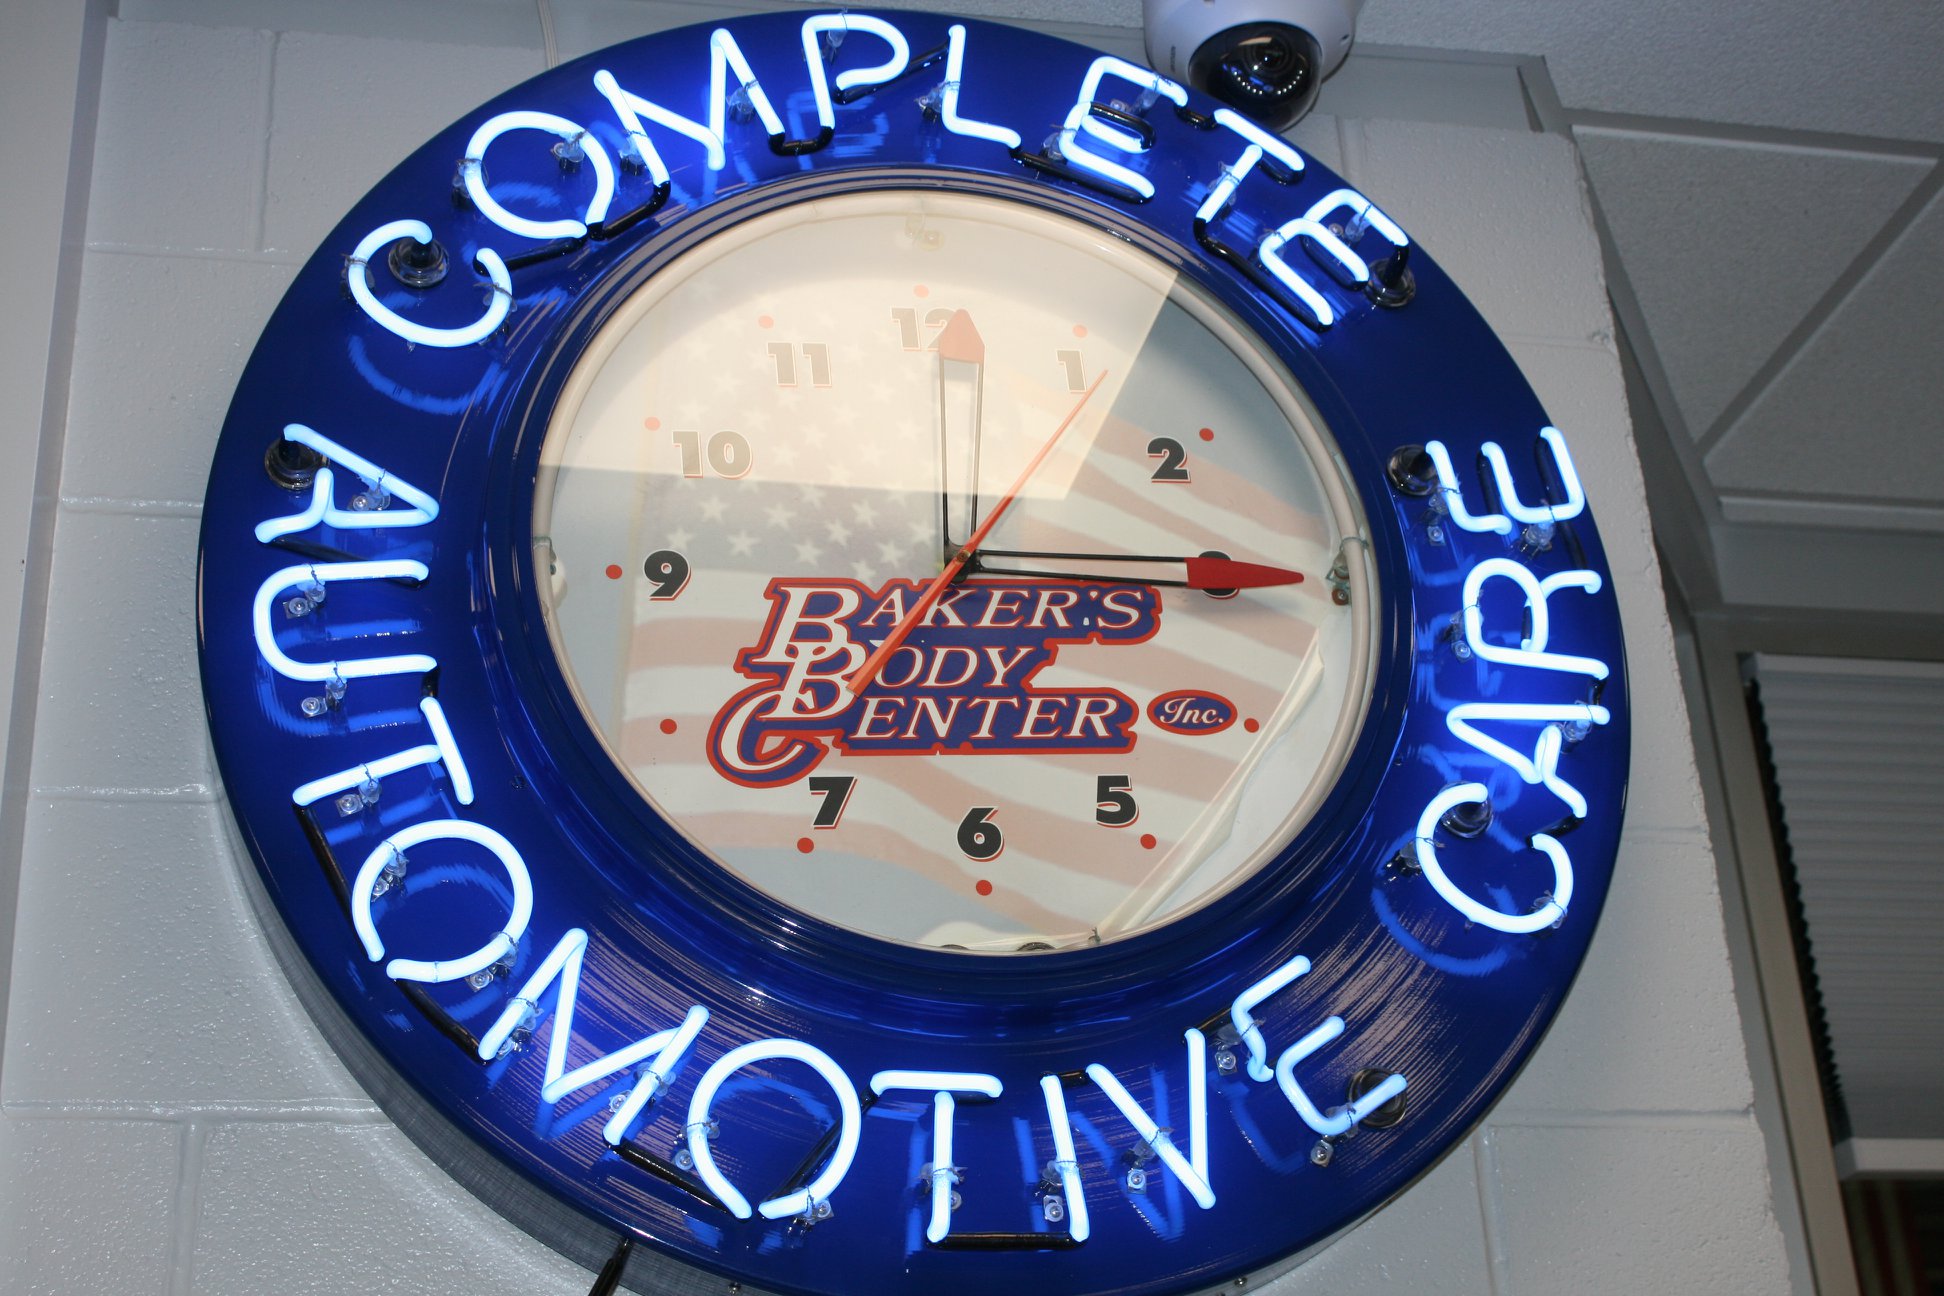 Baker's Body Center decorative clock